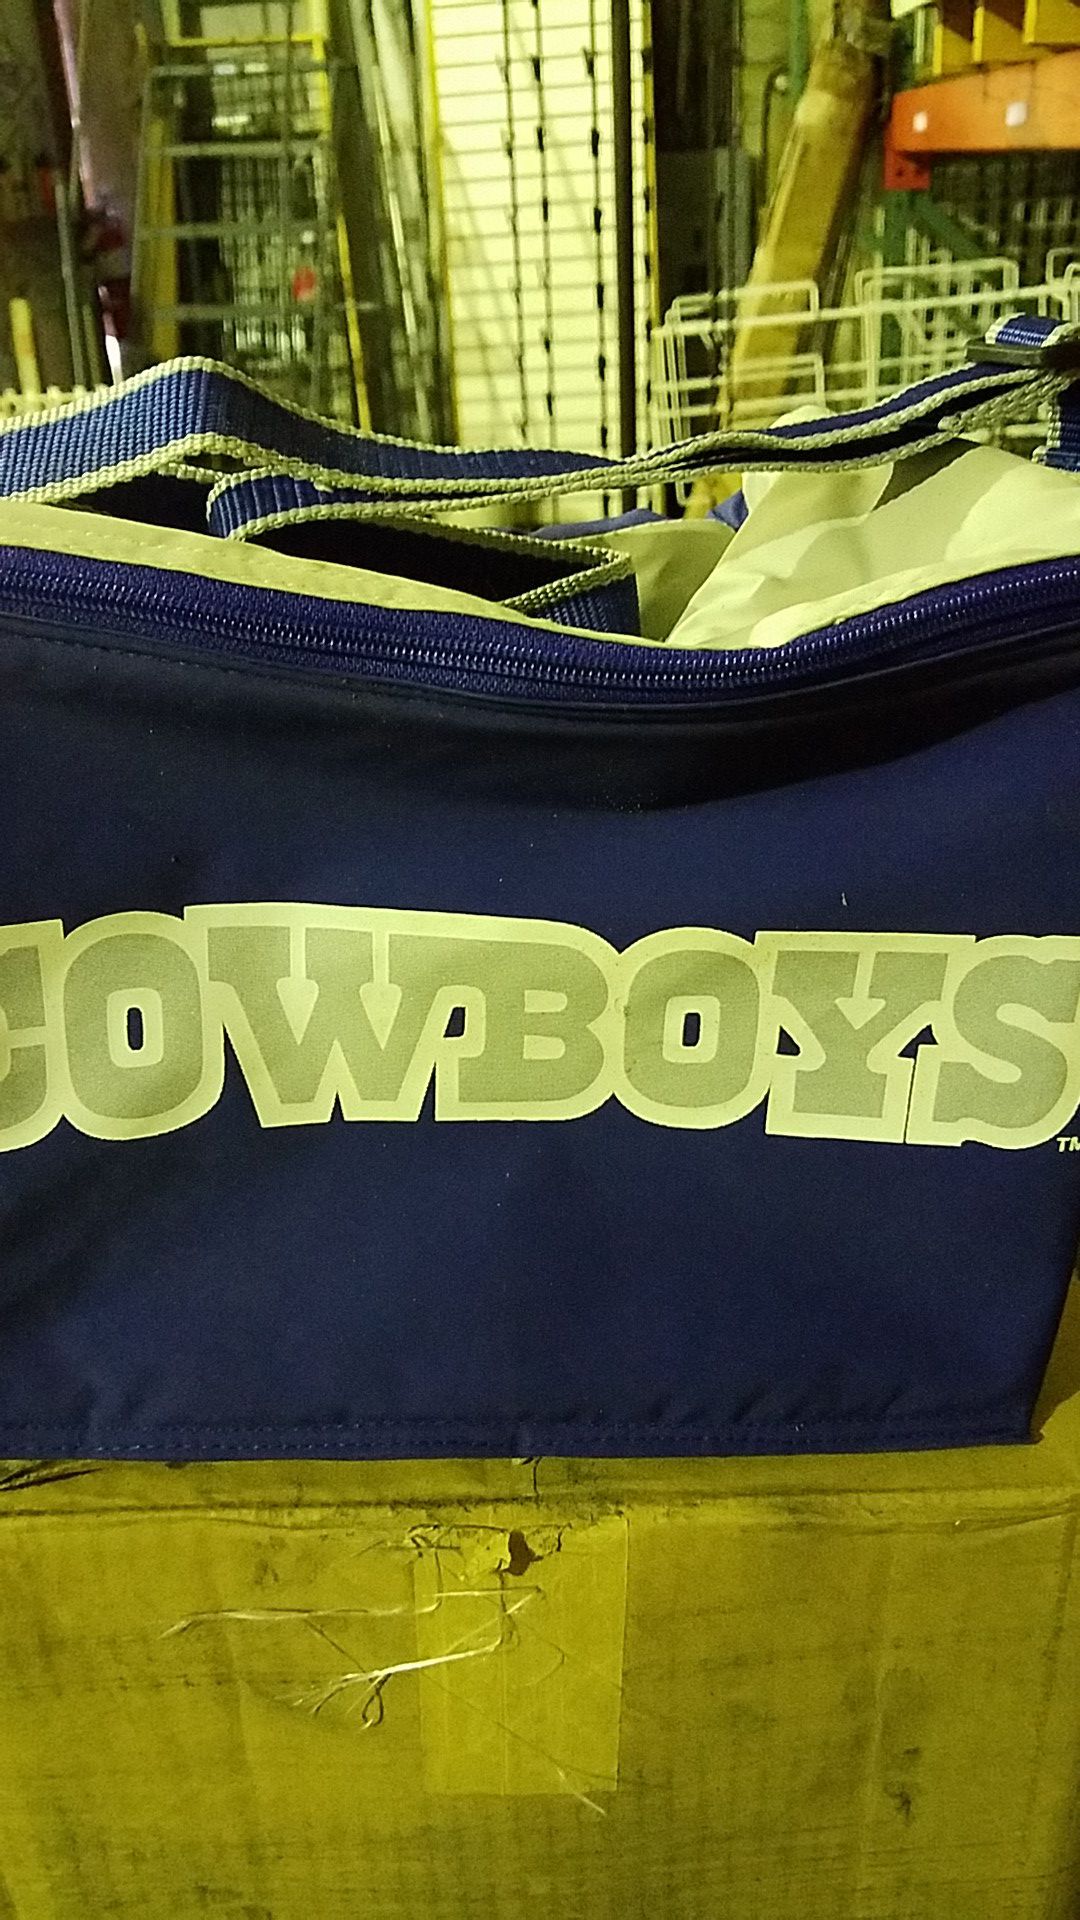 Dallas cowboys 6 pack cooler new